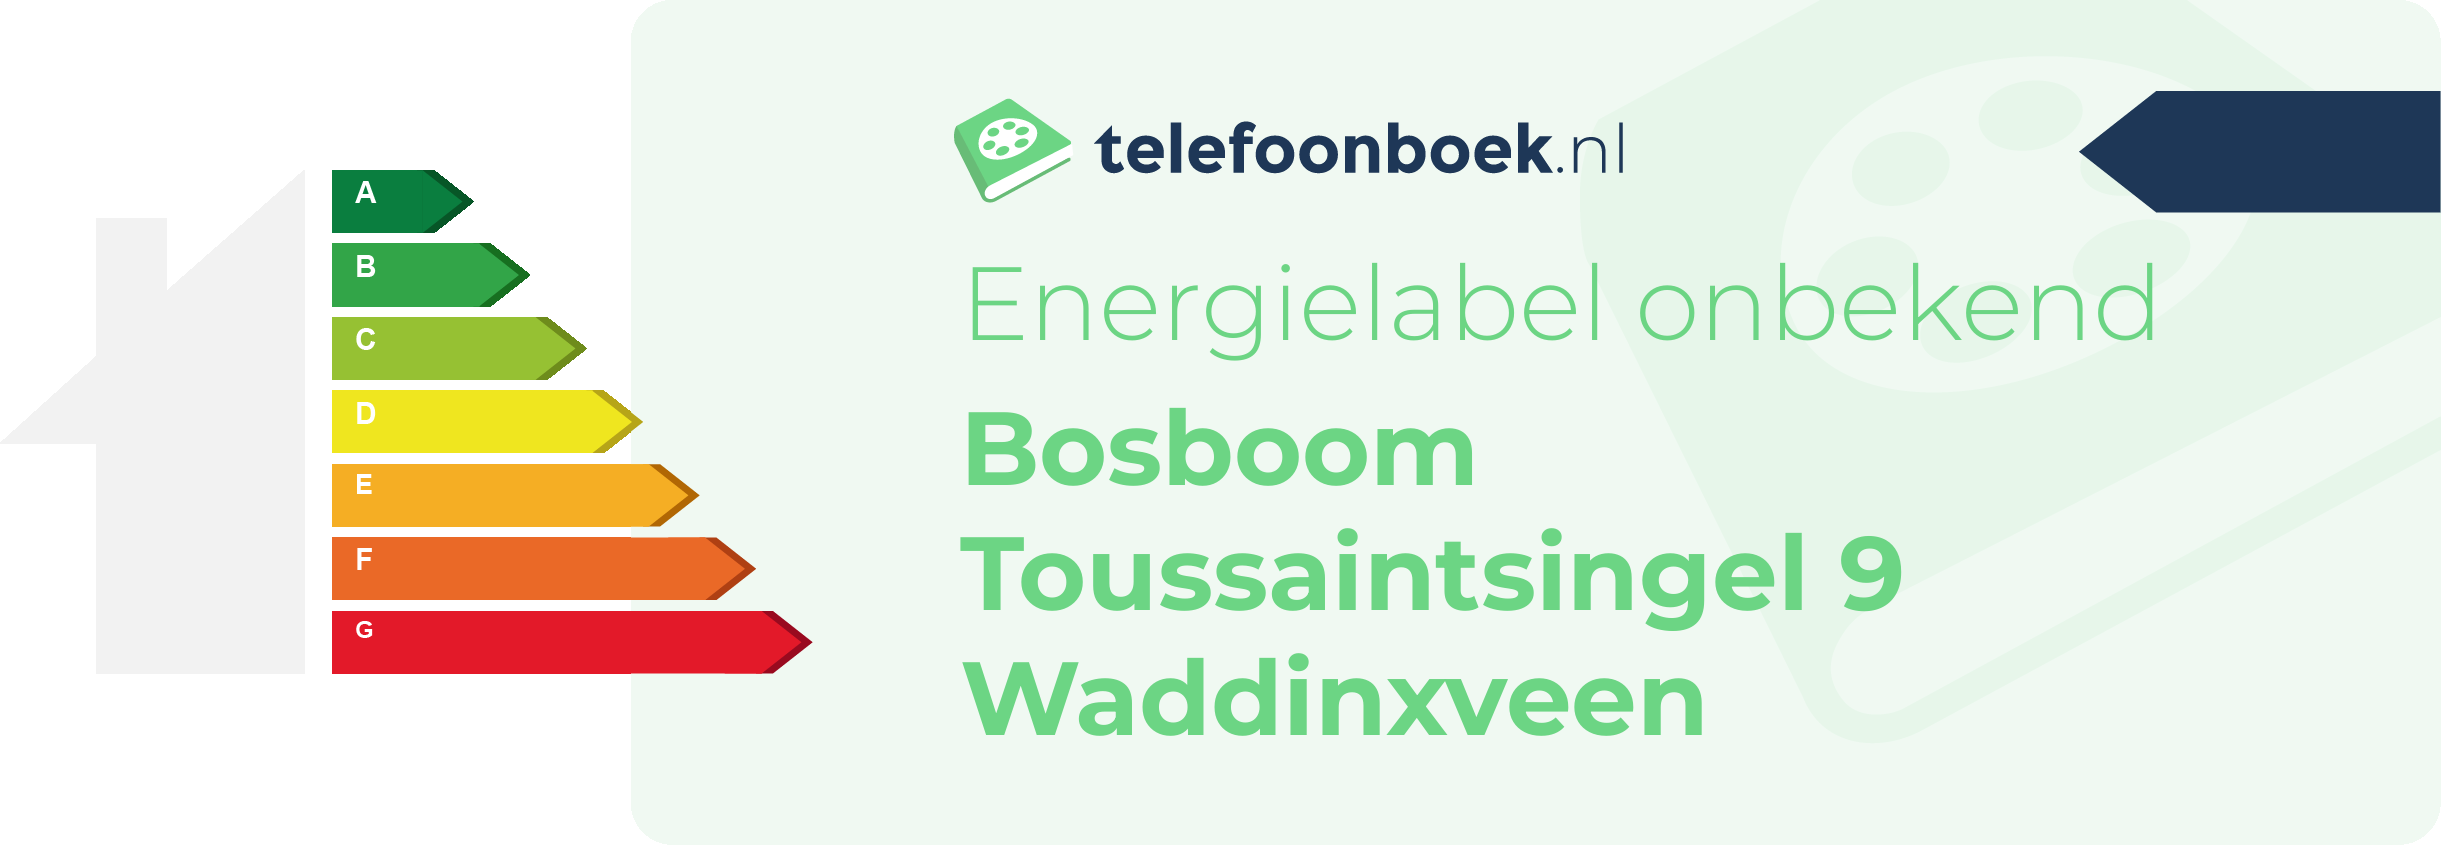 Energielabel Bosboom Toussaintsingel 9 Waddinxveen